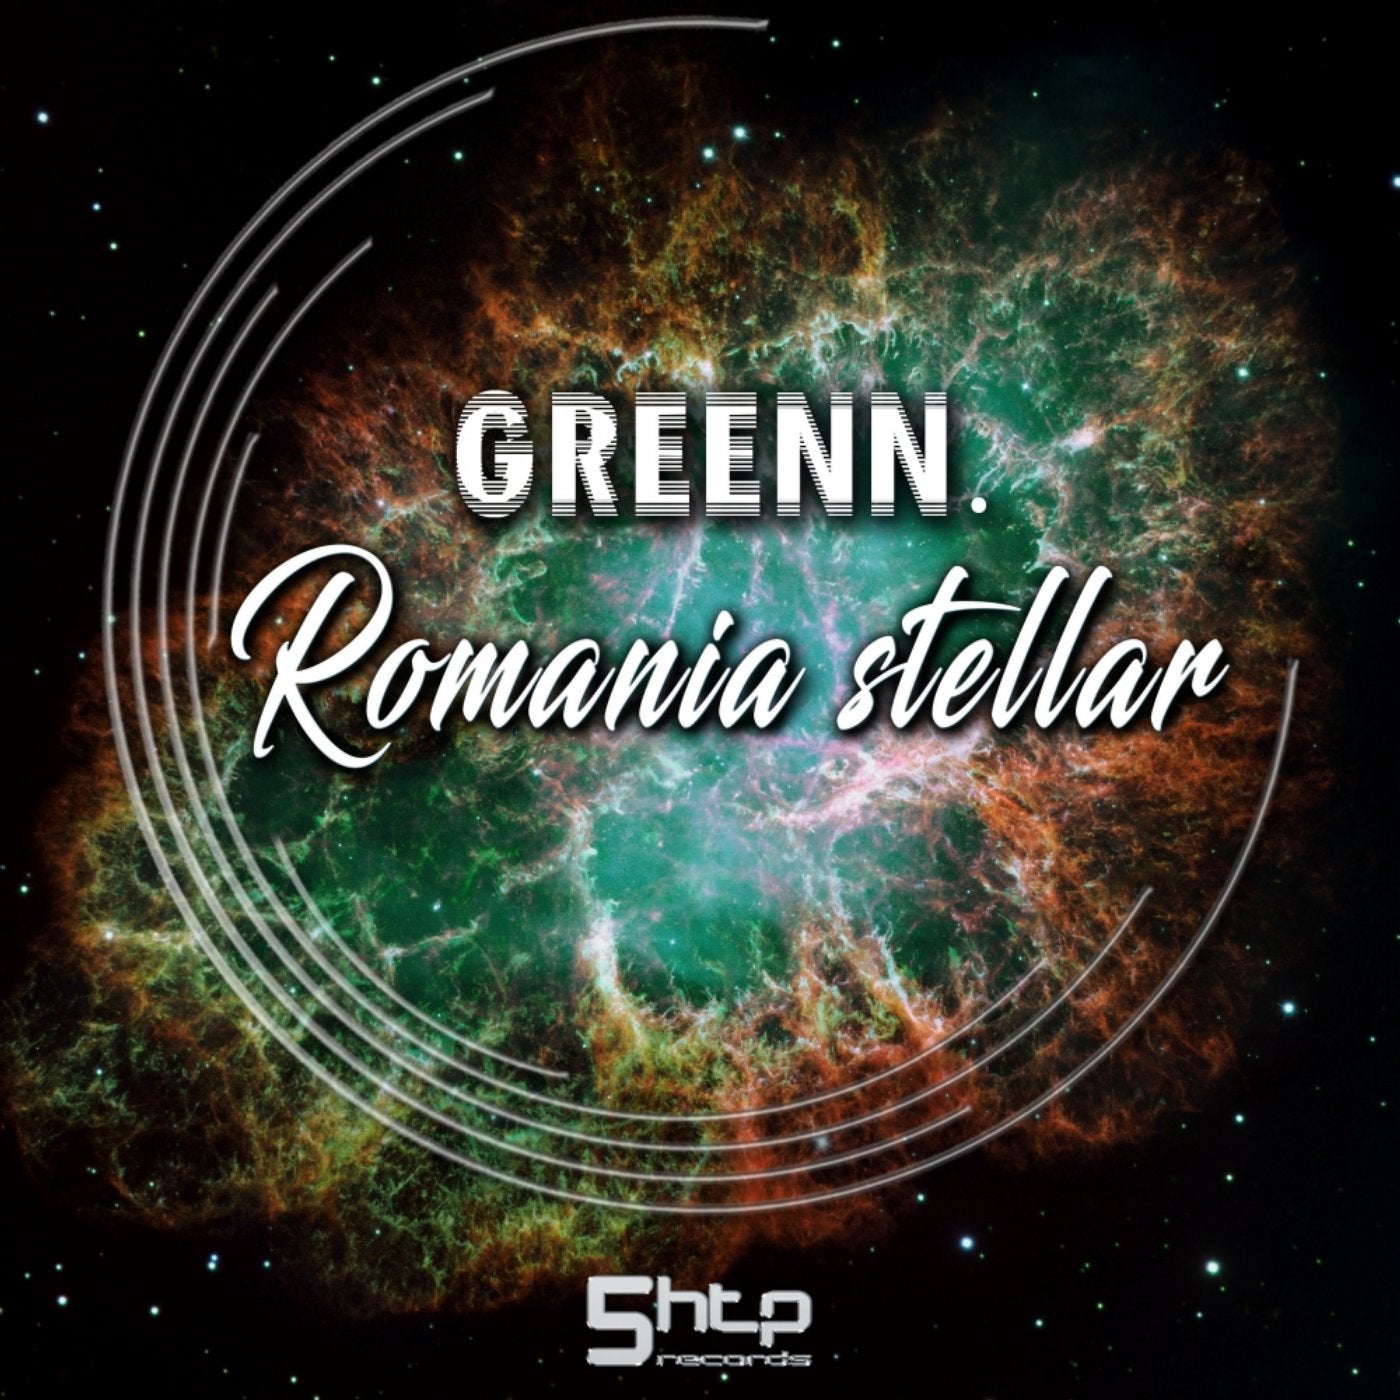 Romania Stellar